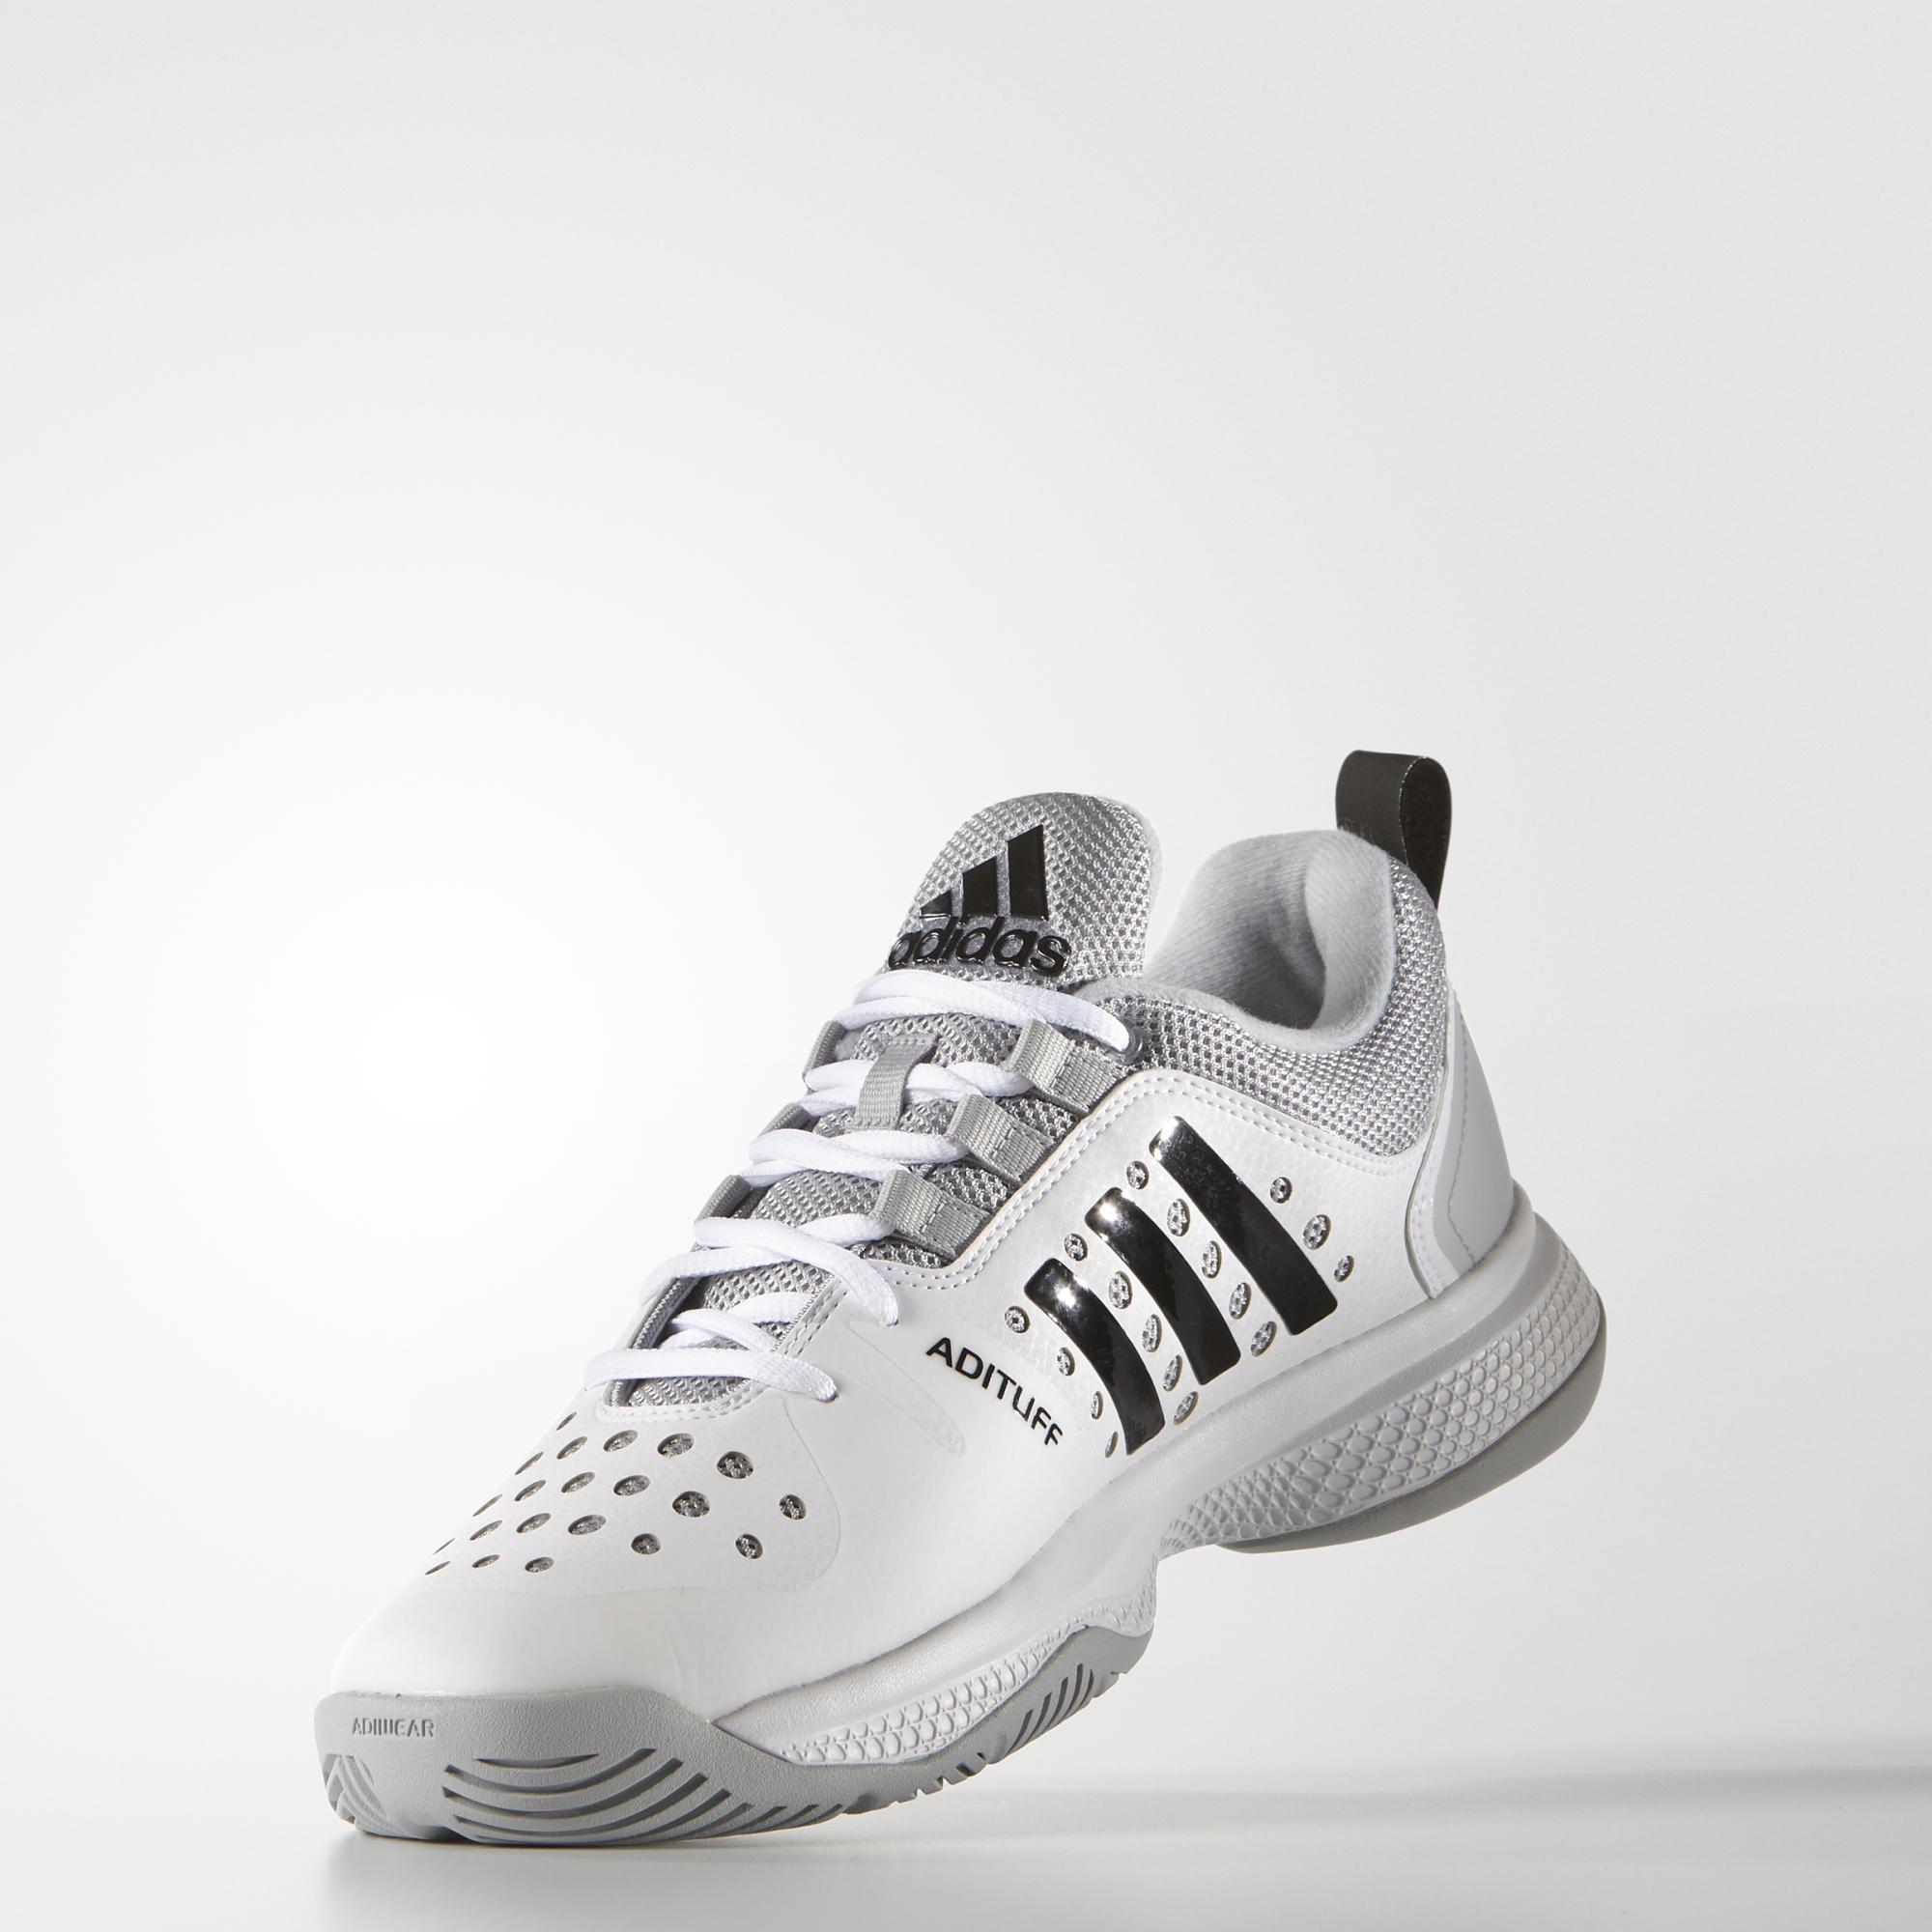 Adidas Mens Barricade Classic Bounce Tennis Shoes - White/Grey ...